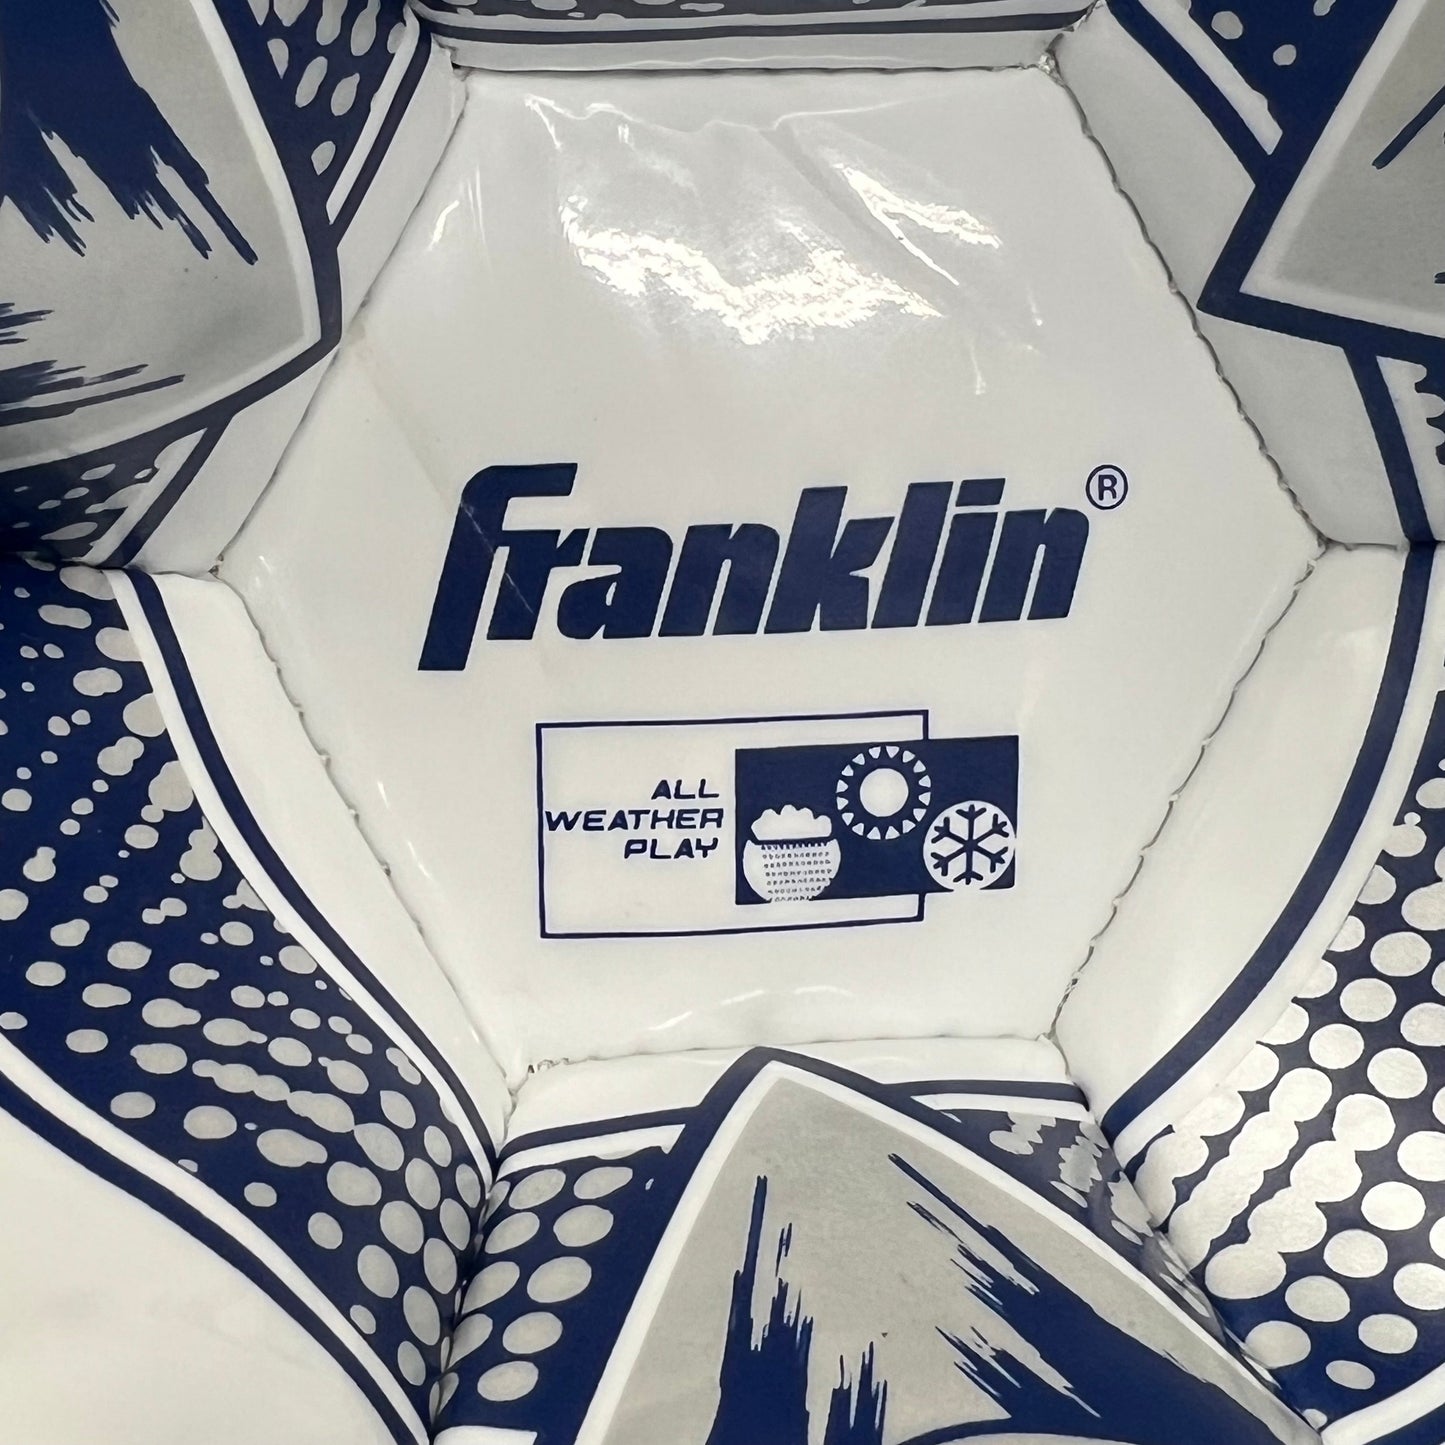 FRANKLIN SPORTS (36 BALLS) Size 3 Soccer Ball "Skyhawks"